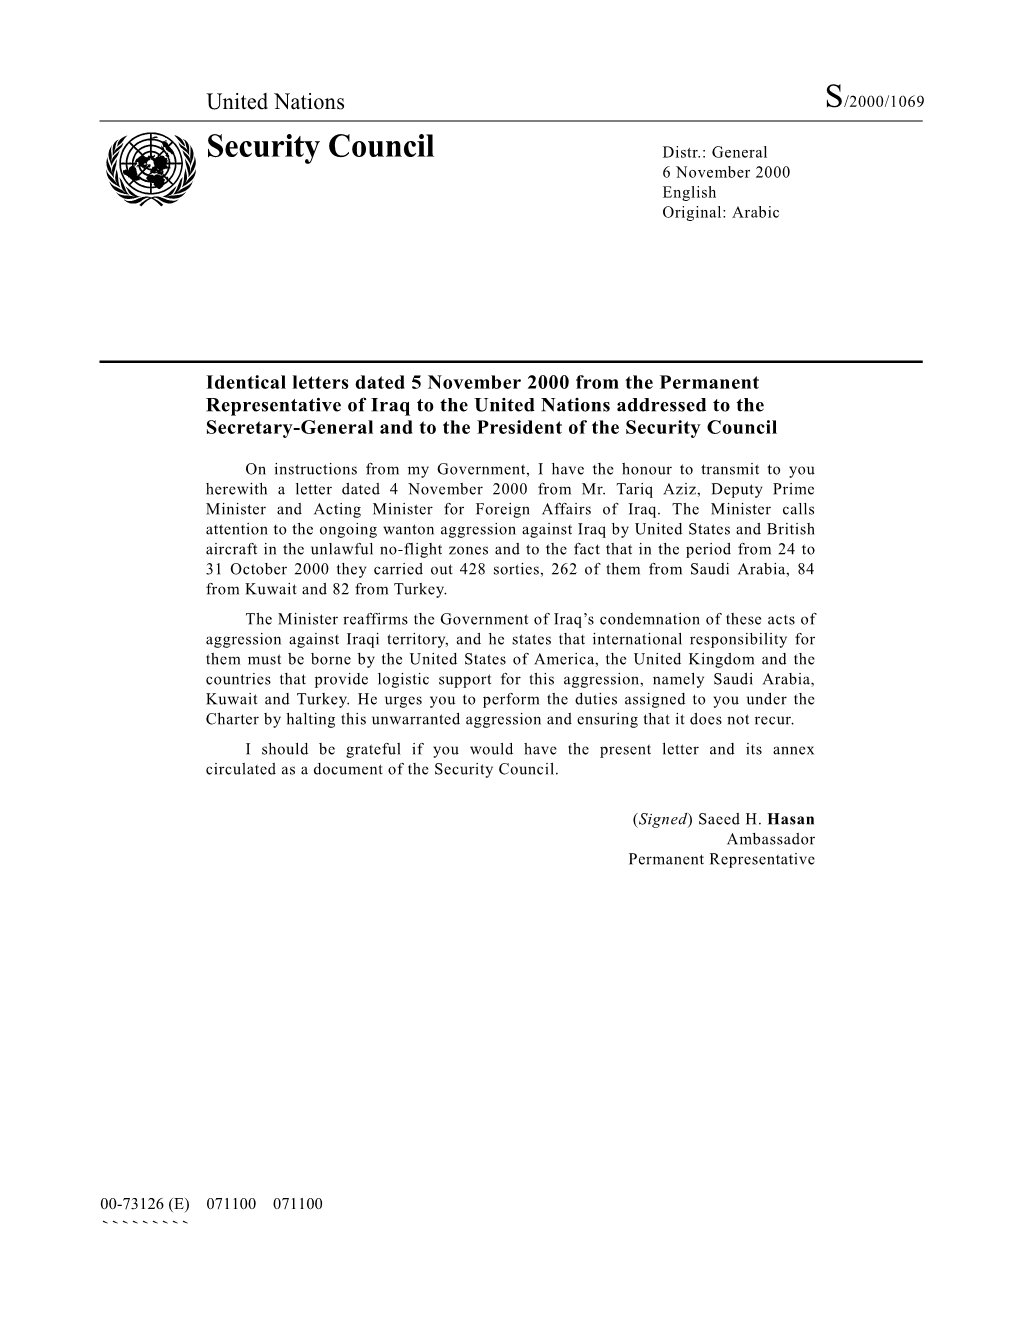 Security Council Distr.: General 6 November 2000 English